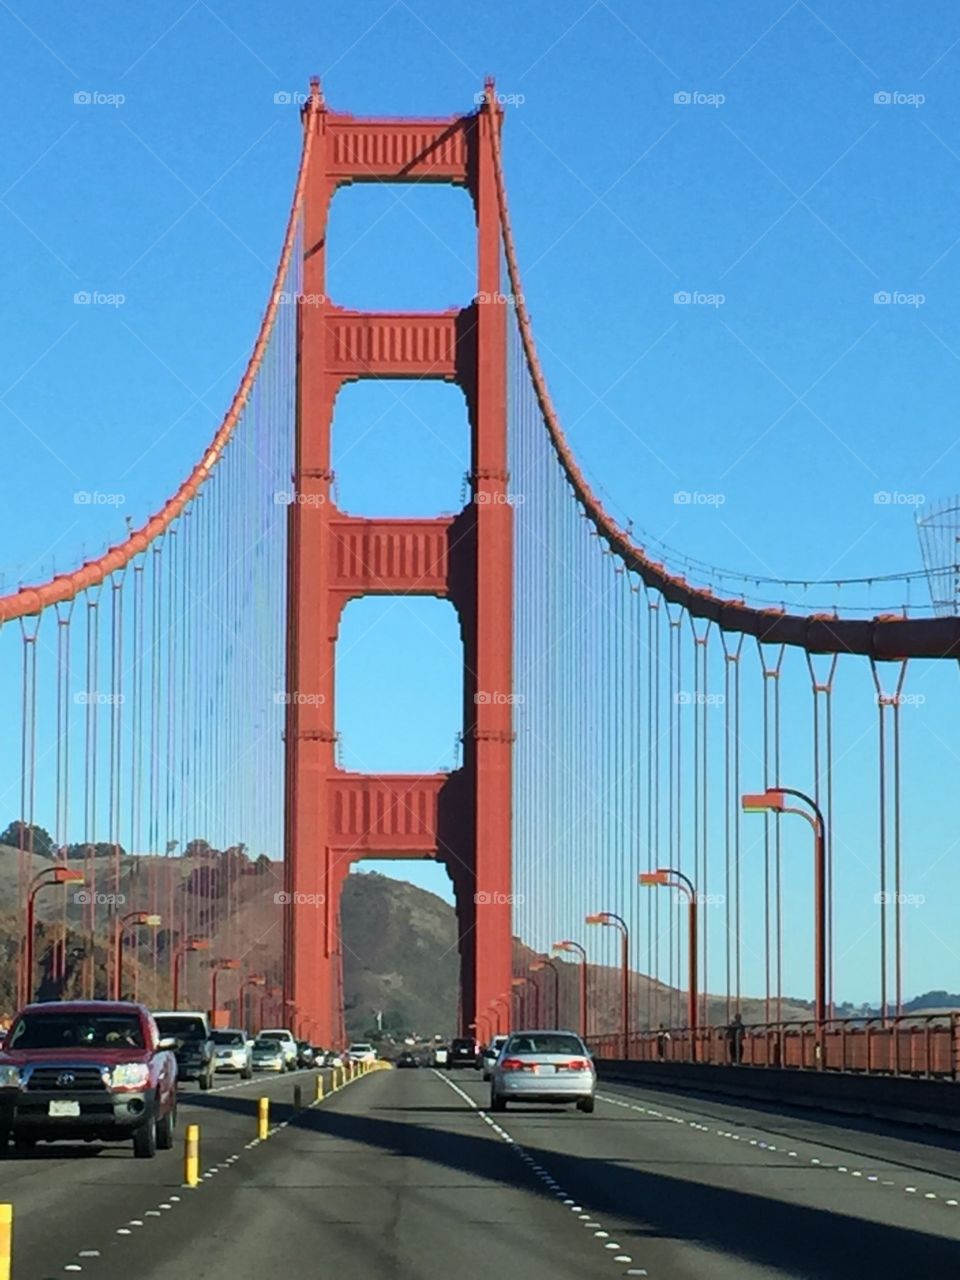 Golden Gate - love photo taking if the bridge 